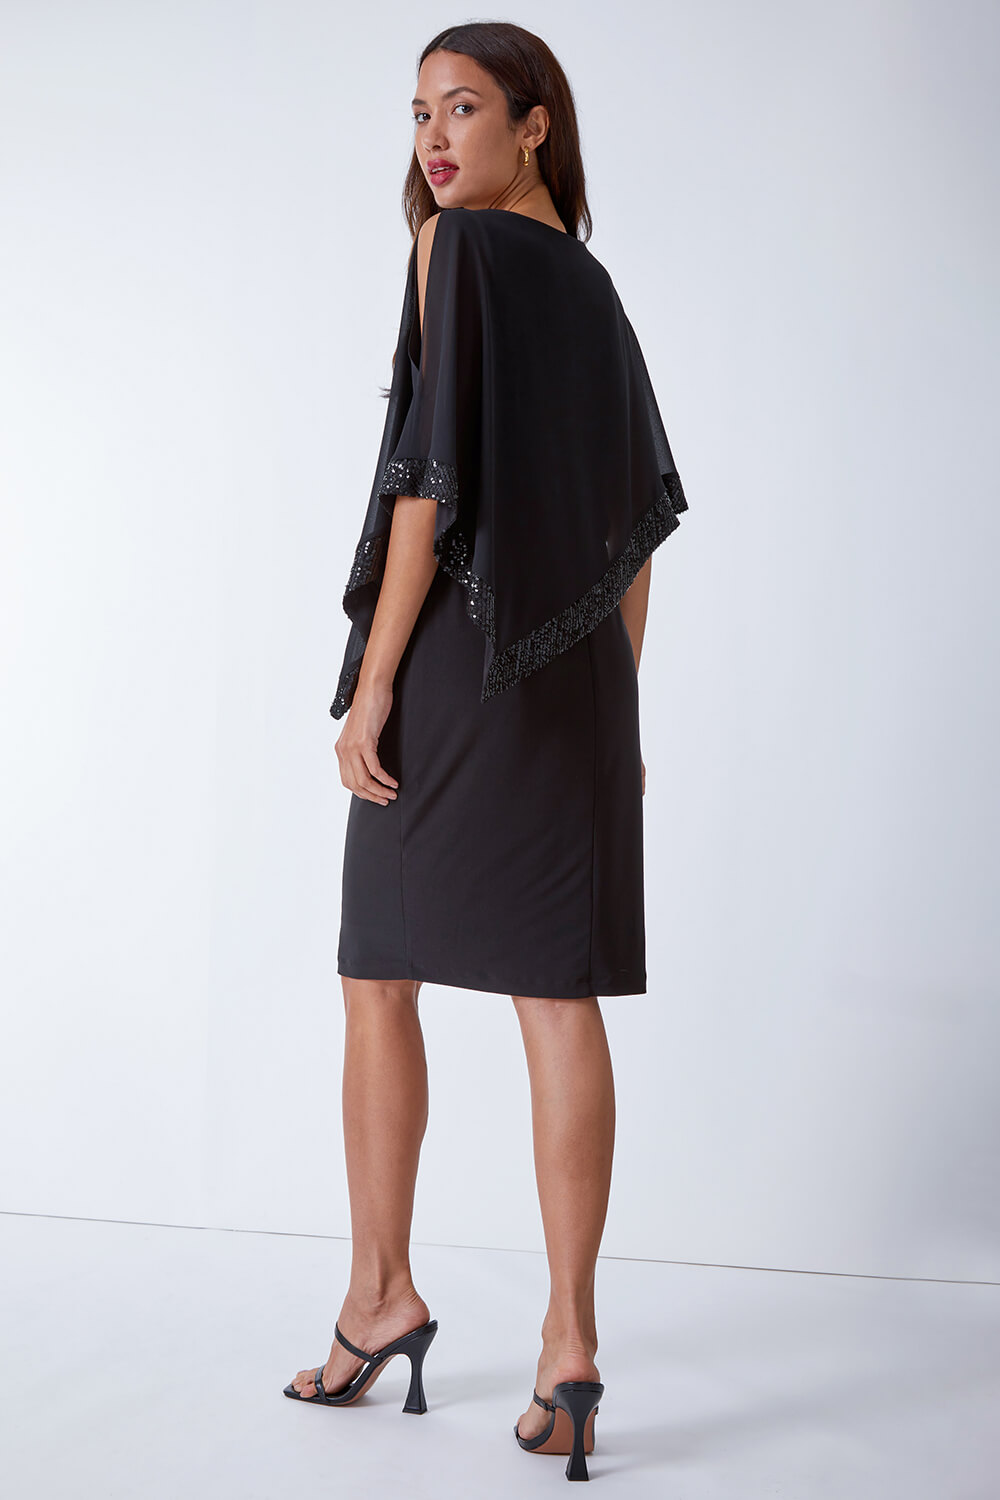 Black Sequin Trim Asymmetric Chiffon Overlay Dress, Image 3 of 5